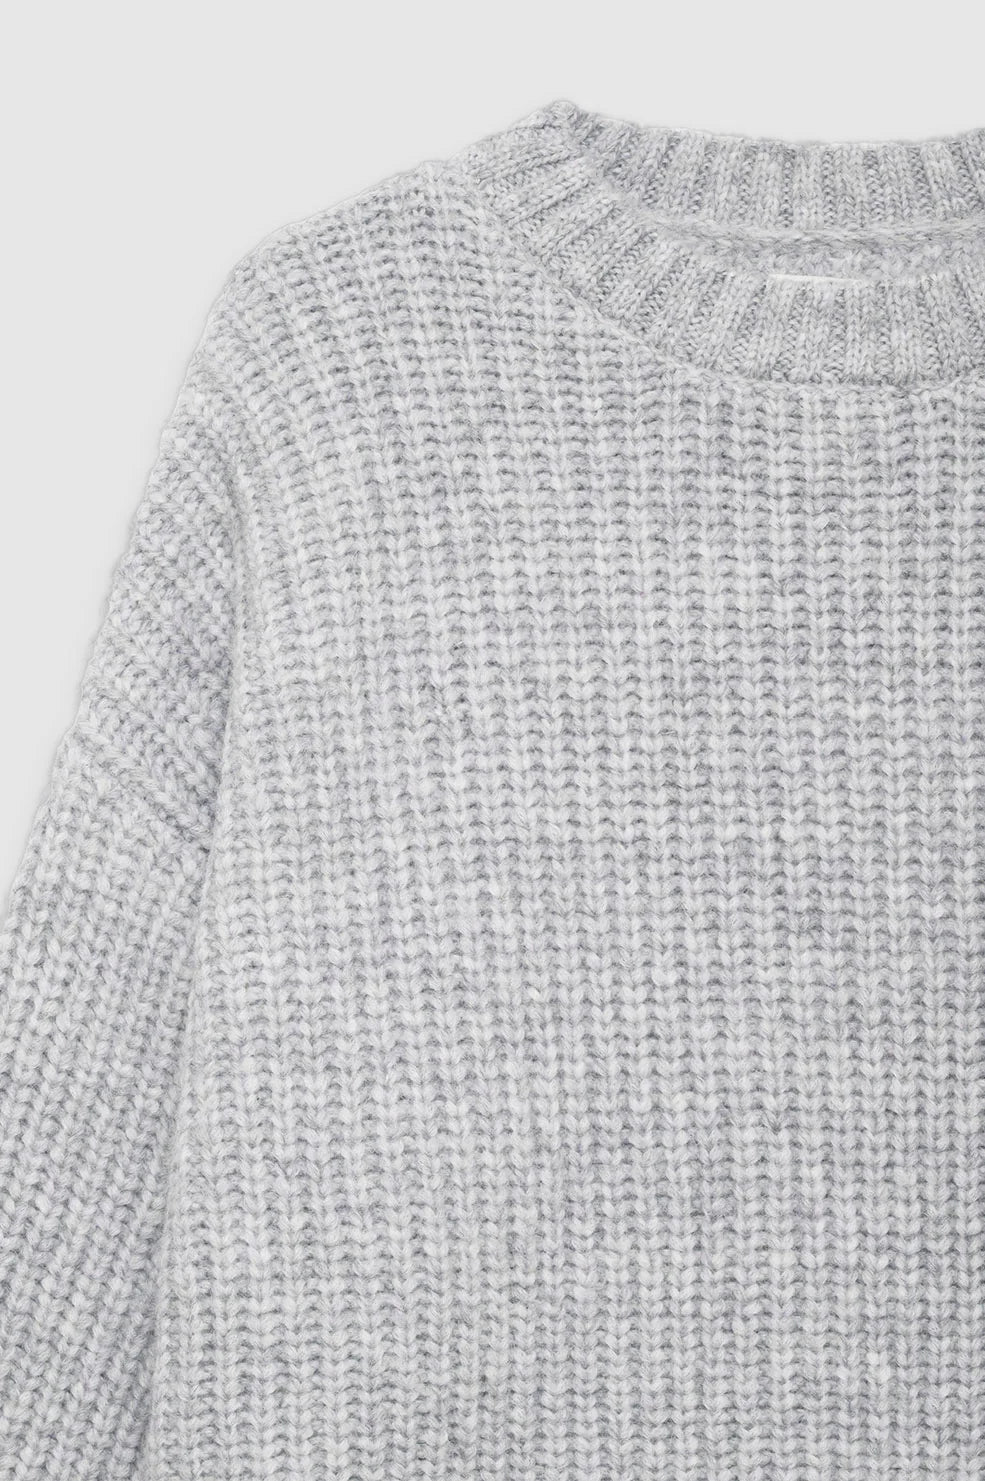 Sydney crew sweater - grey